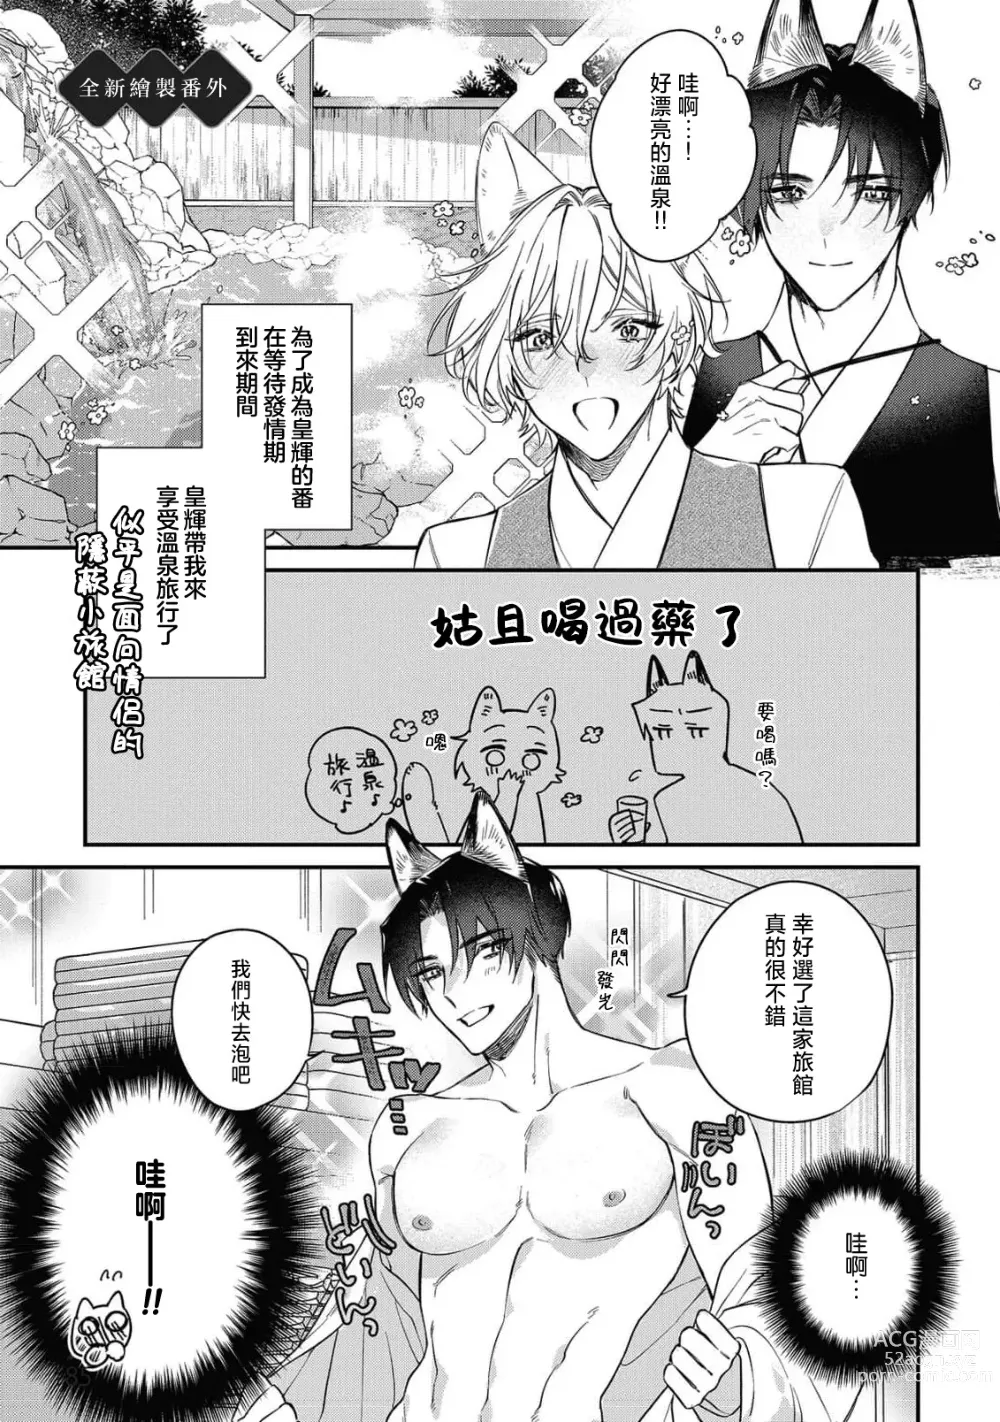 Page 8 of manga 无可奈何花落去 只叹道，命运使然 番外